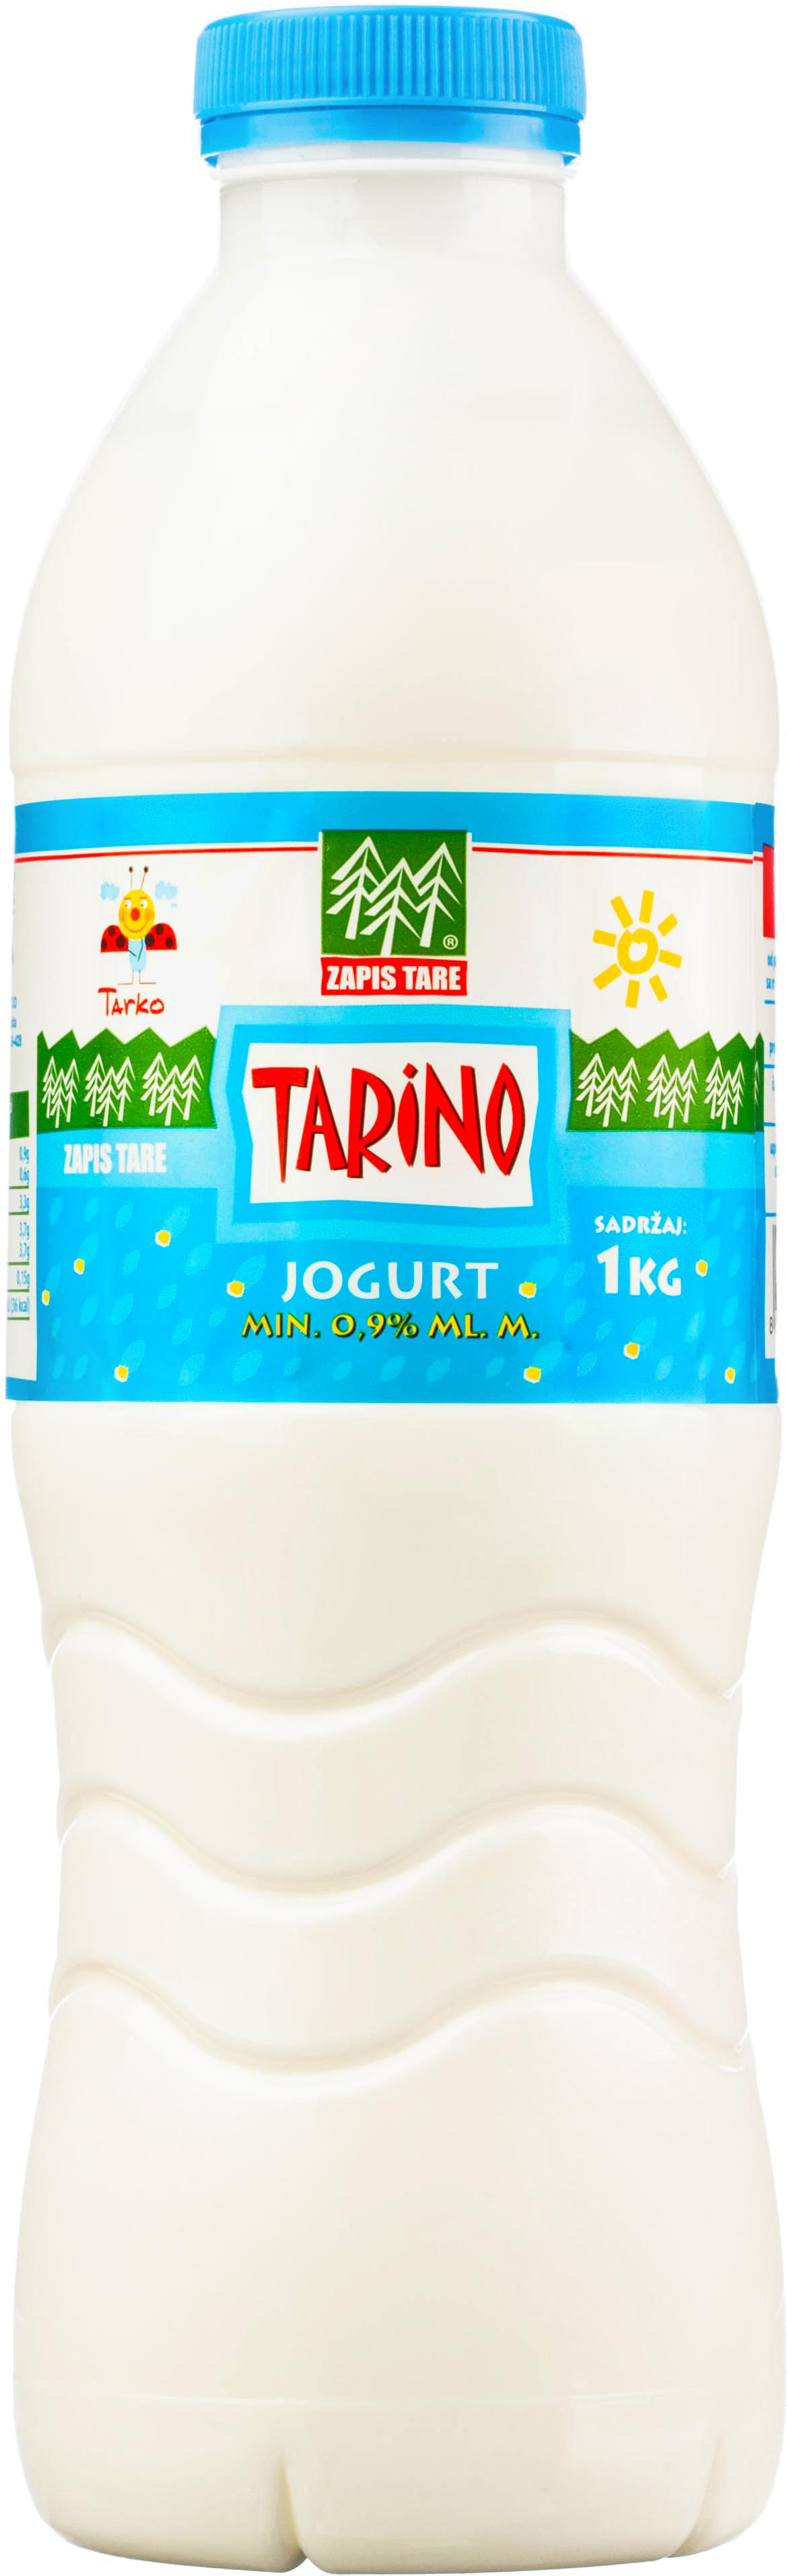 Slika za Jogurt Tarino 0.9%mm Zapis Tare 1kg